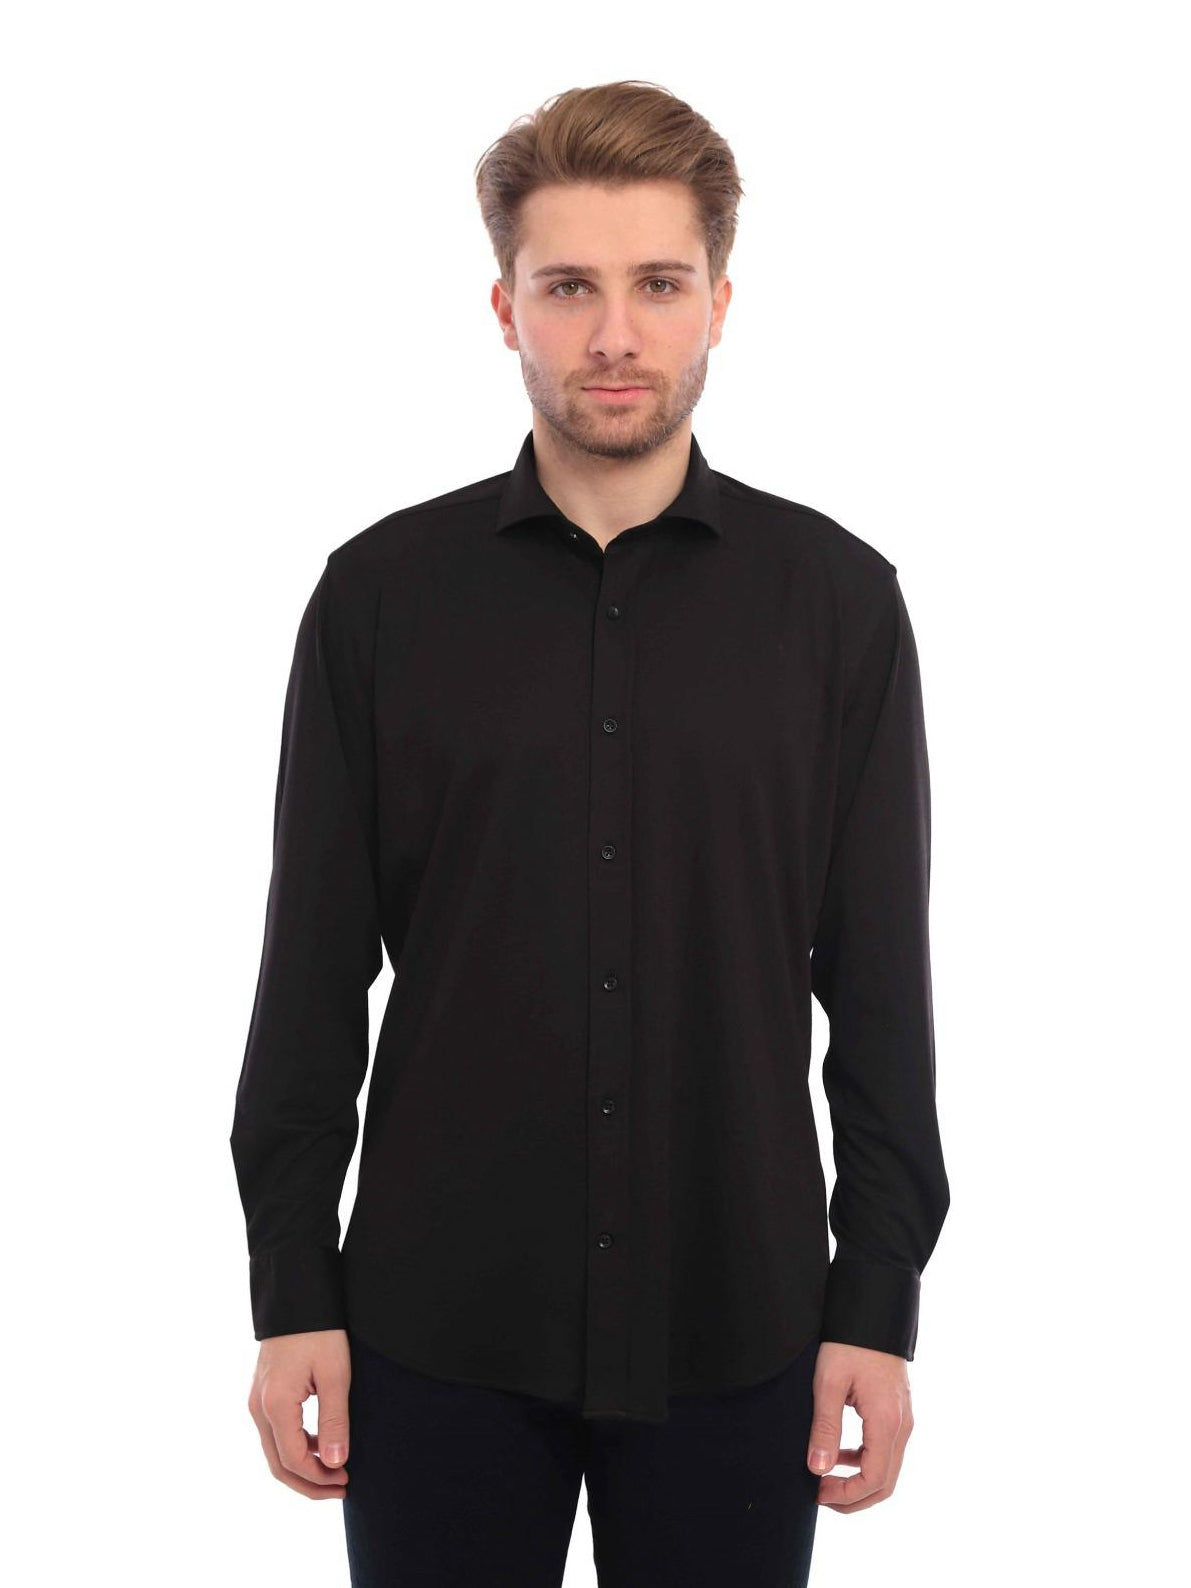 Enzo Liberti Mens Solid Black Modern Fit 100% Cotton Jersey Dress Shirt